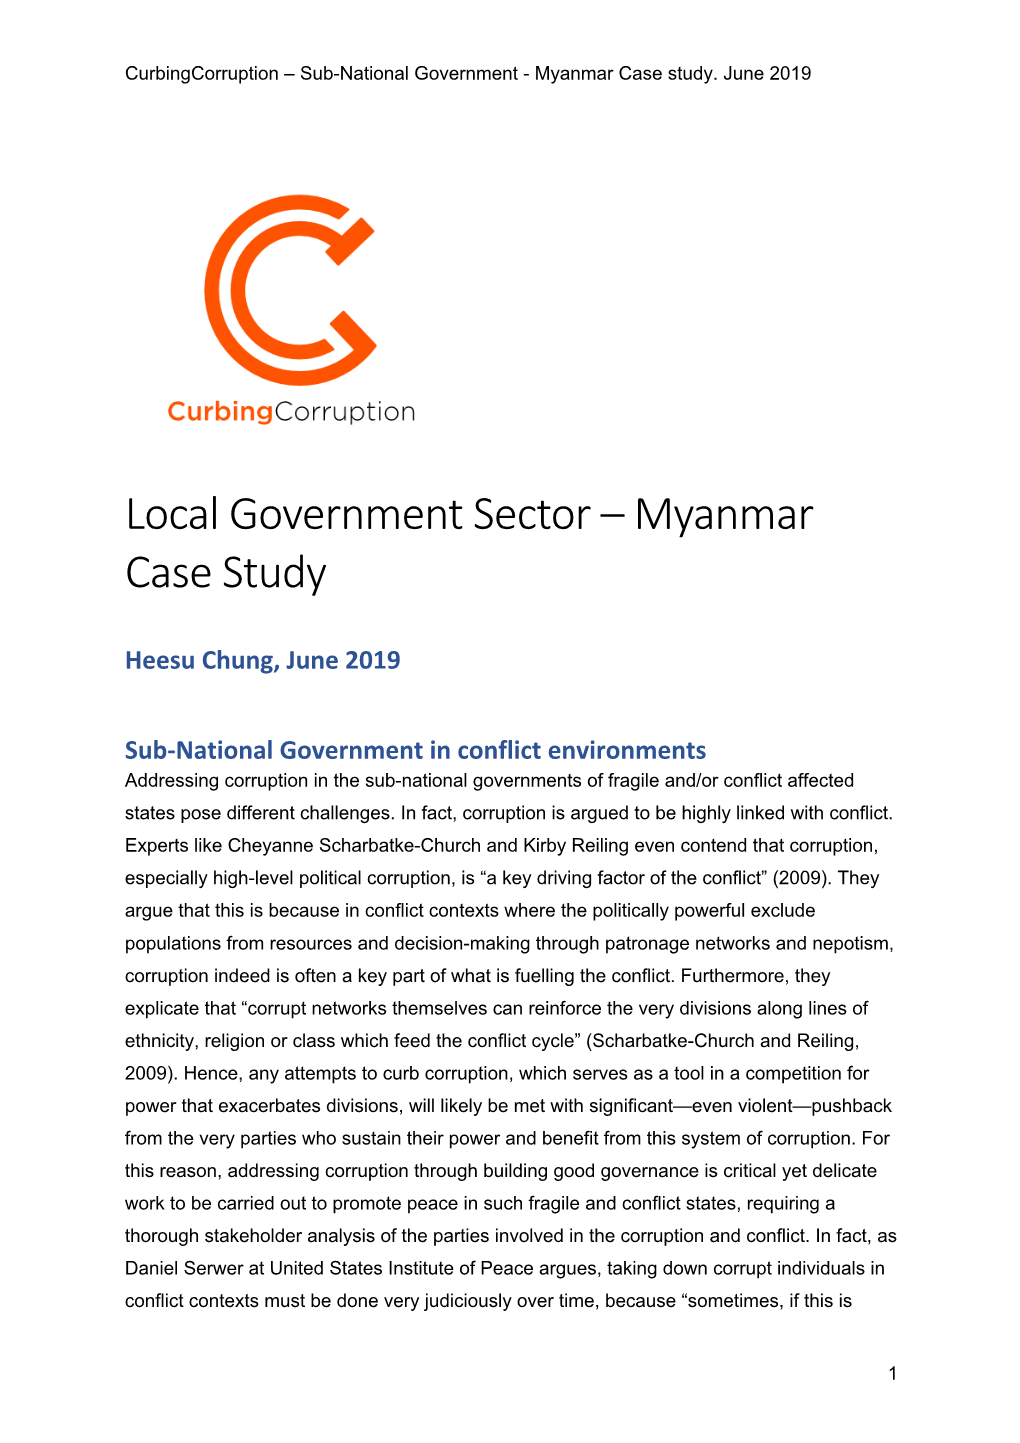 Myanmar Case Study